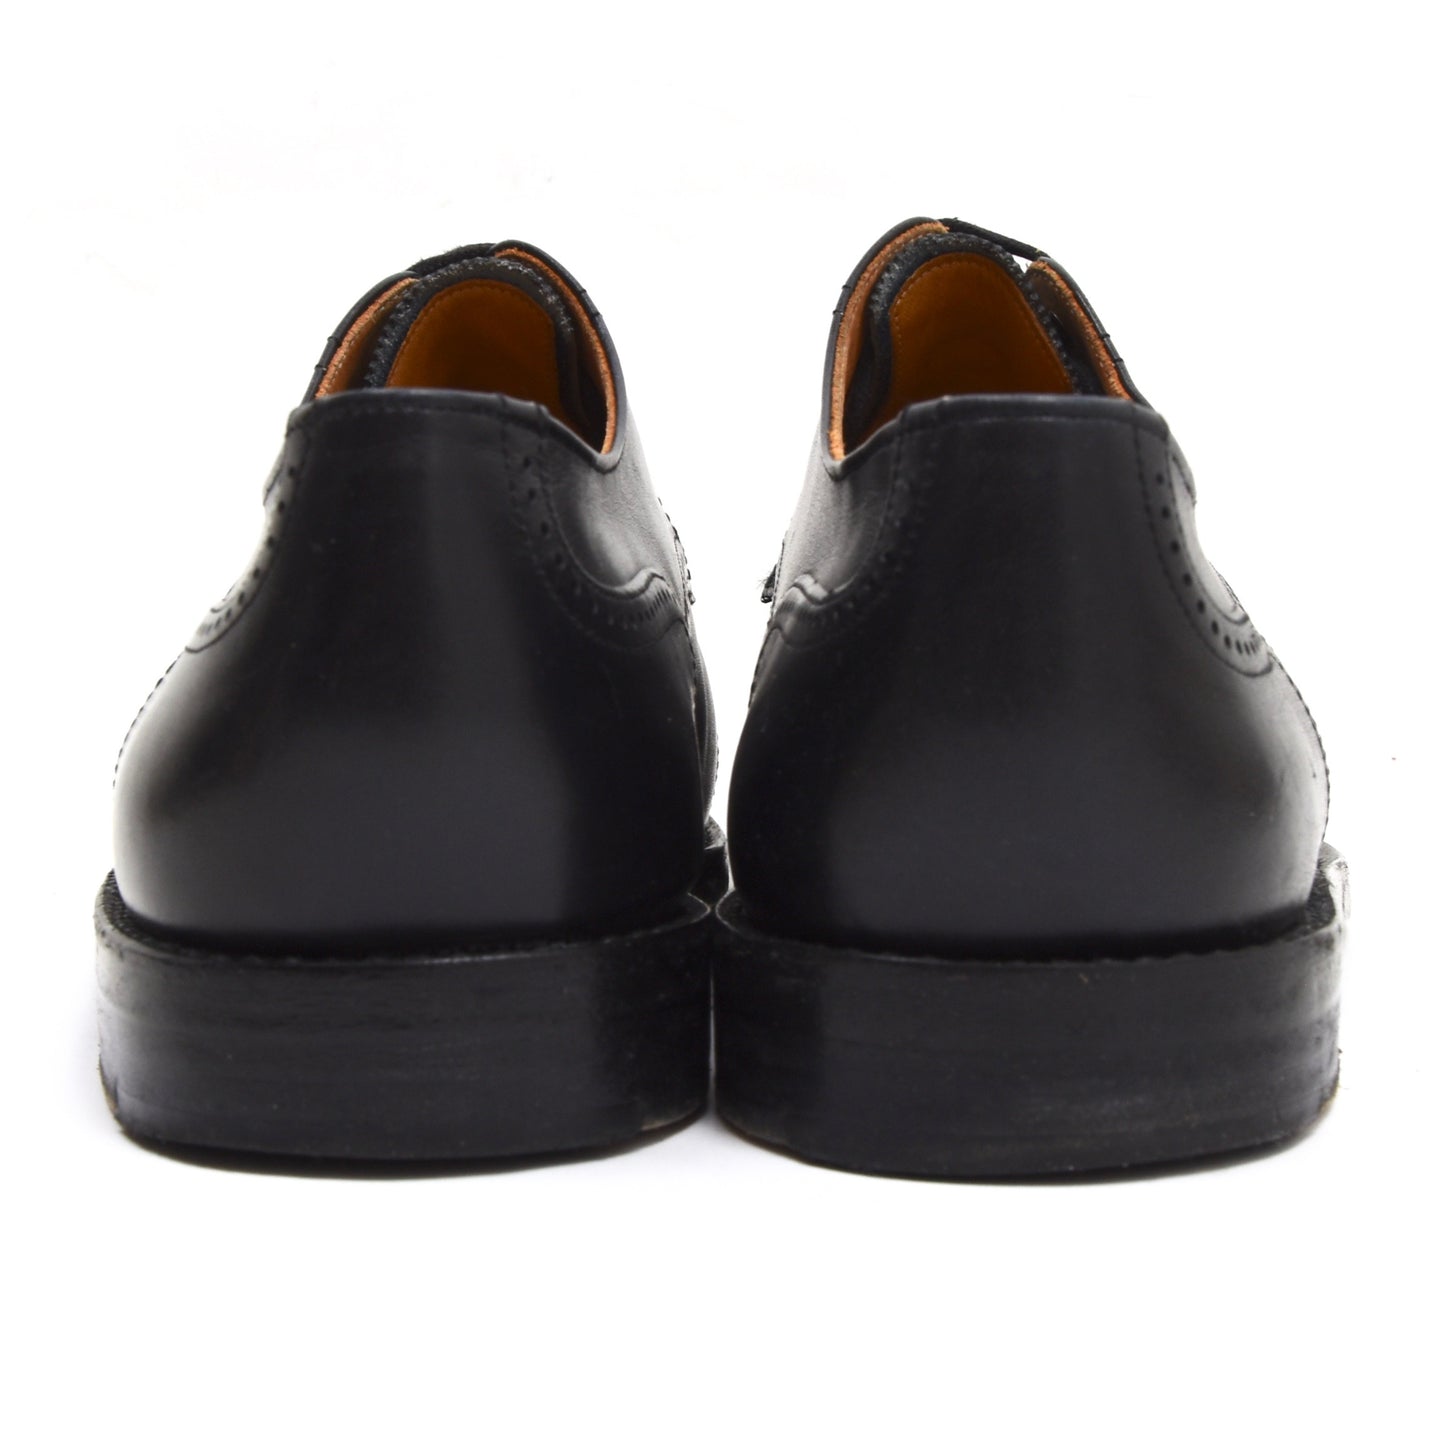 Ludwig Reiter Cap Toe Shoes Size 8 - Black